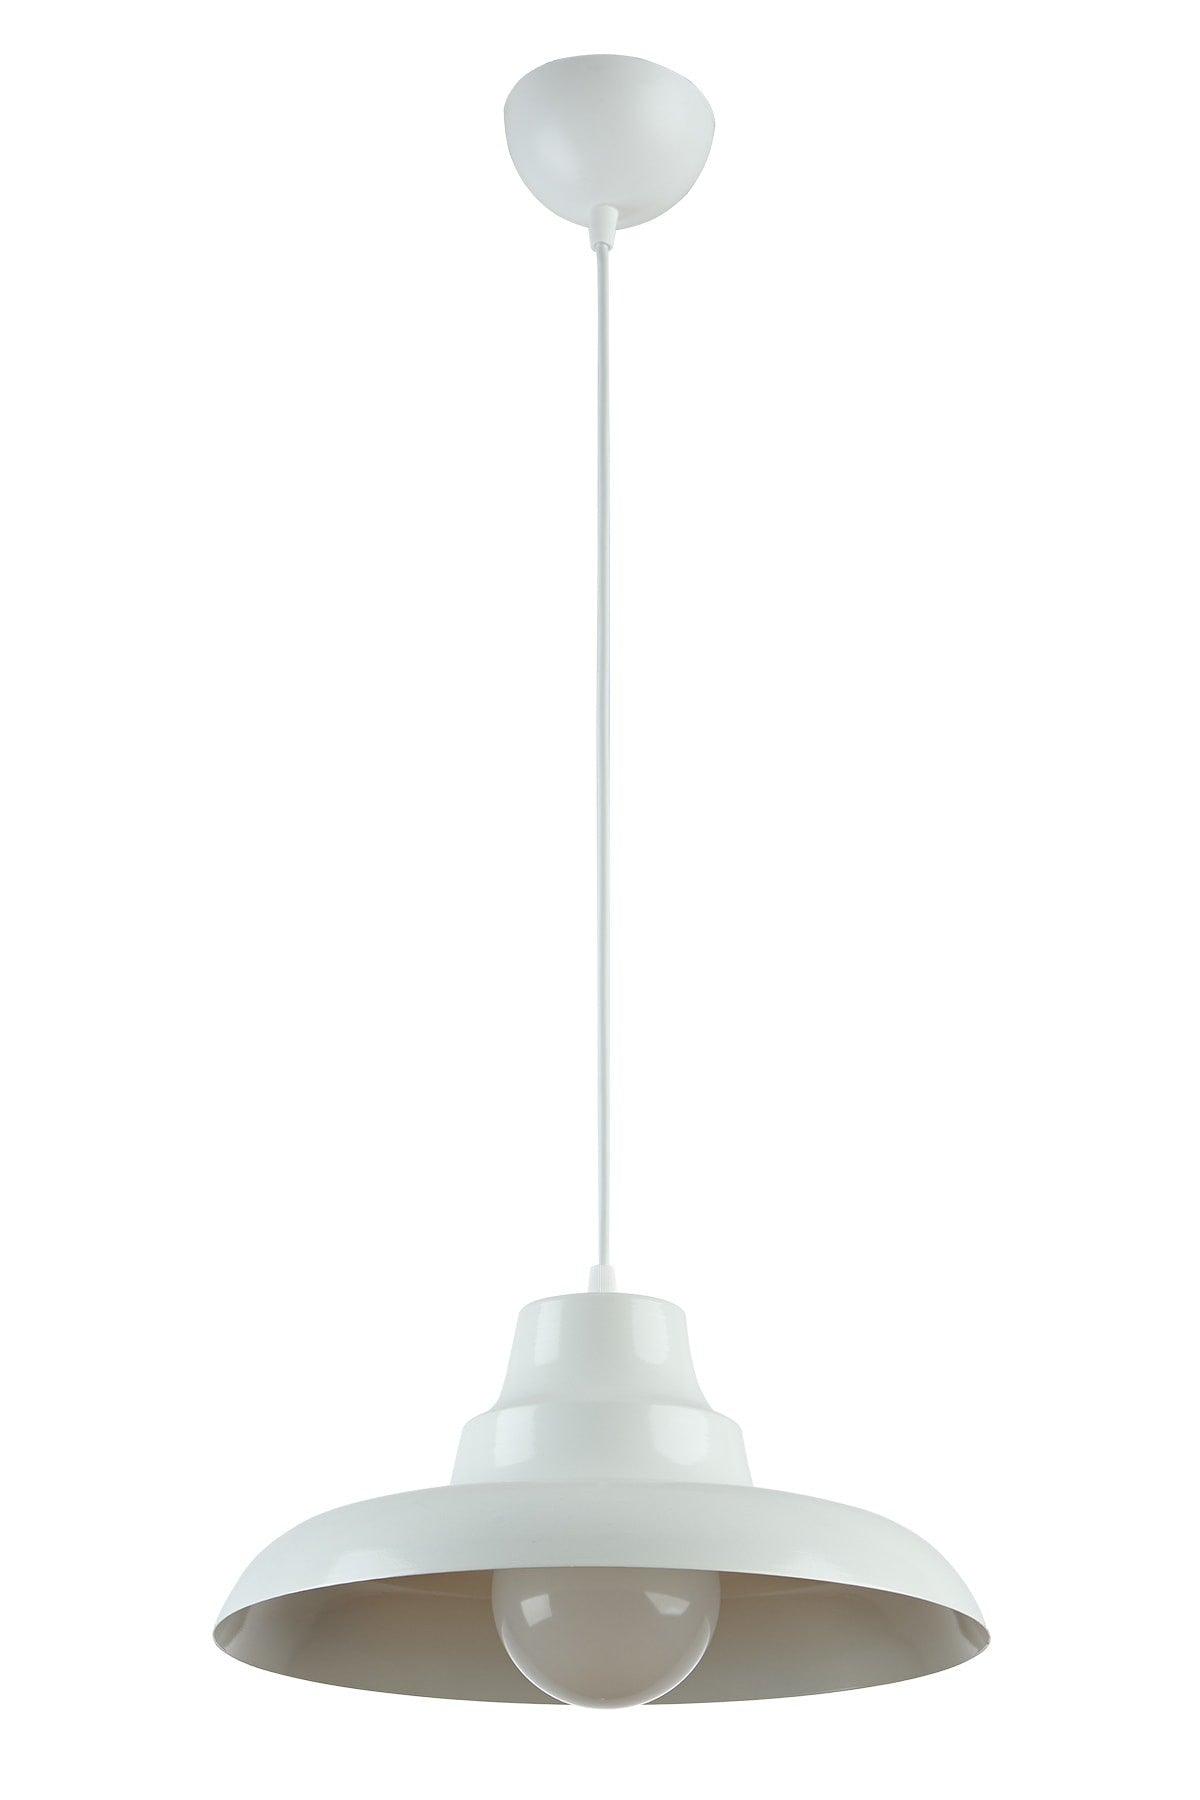 Carmen Special Design(DIA 30 CM)modern Sports Decorative Cafe-kitchen White Inside White Single Pendant Lamp Chandelier - Swordslife